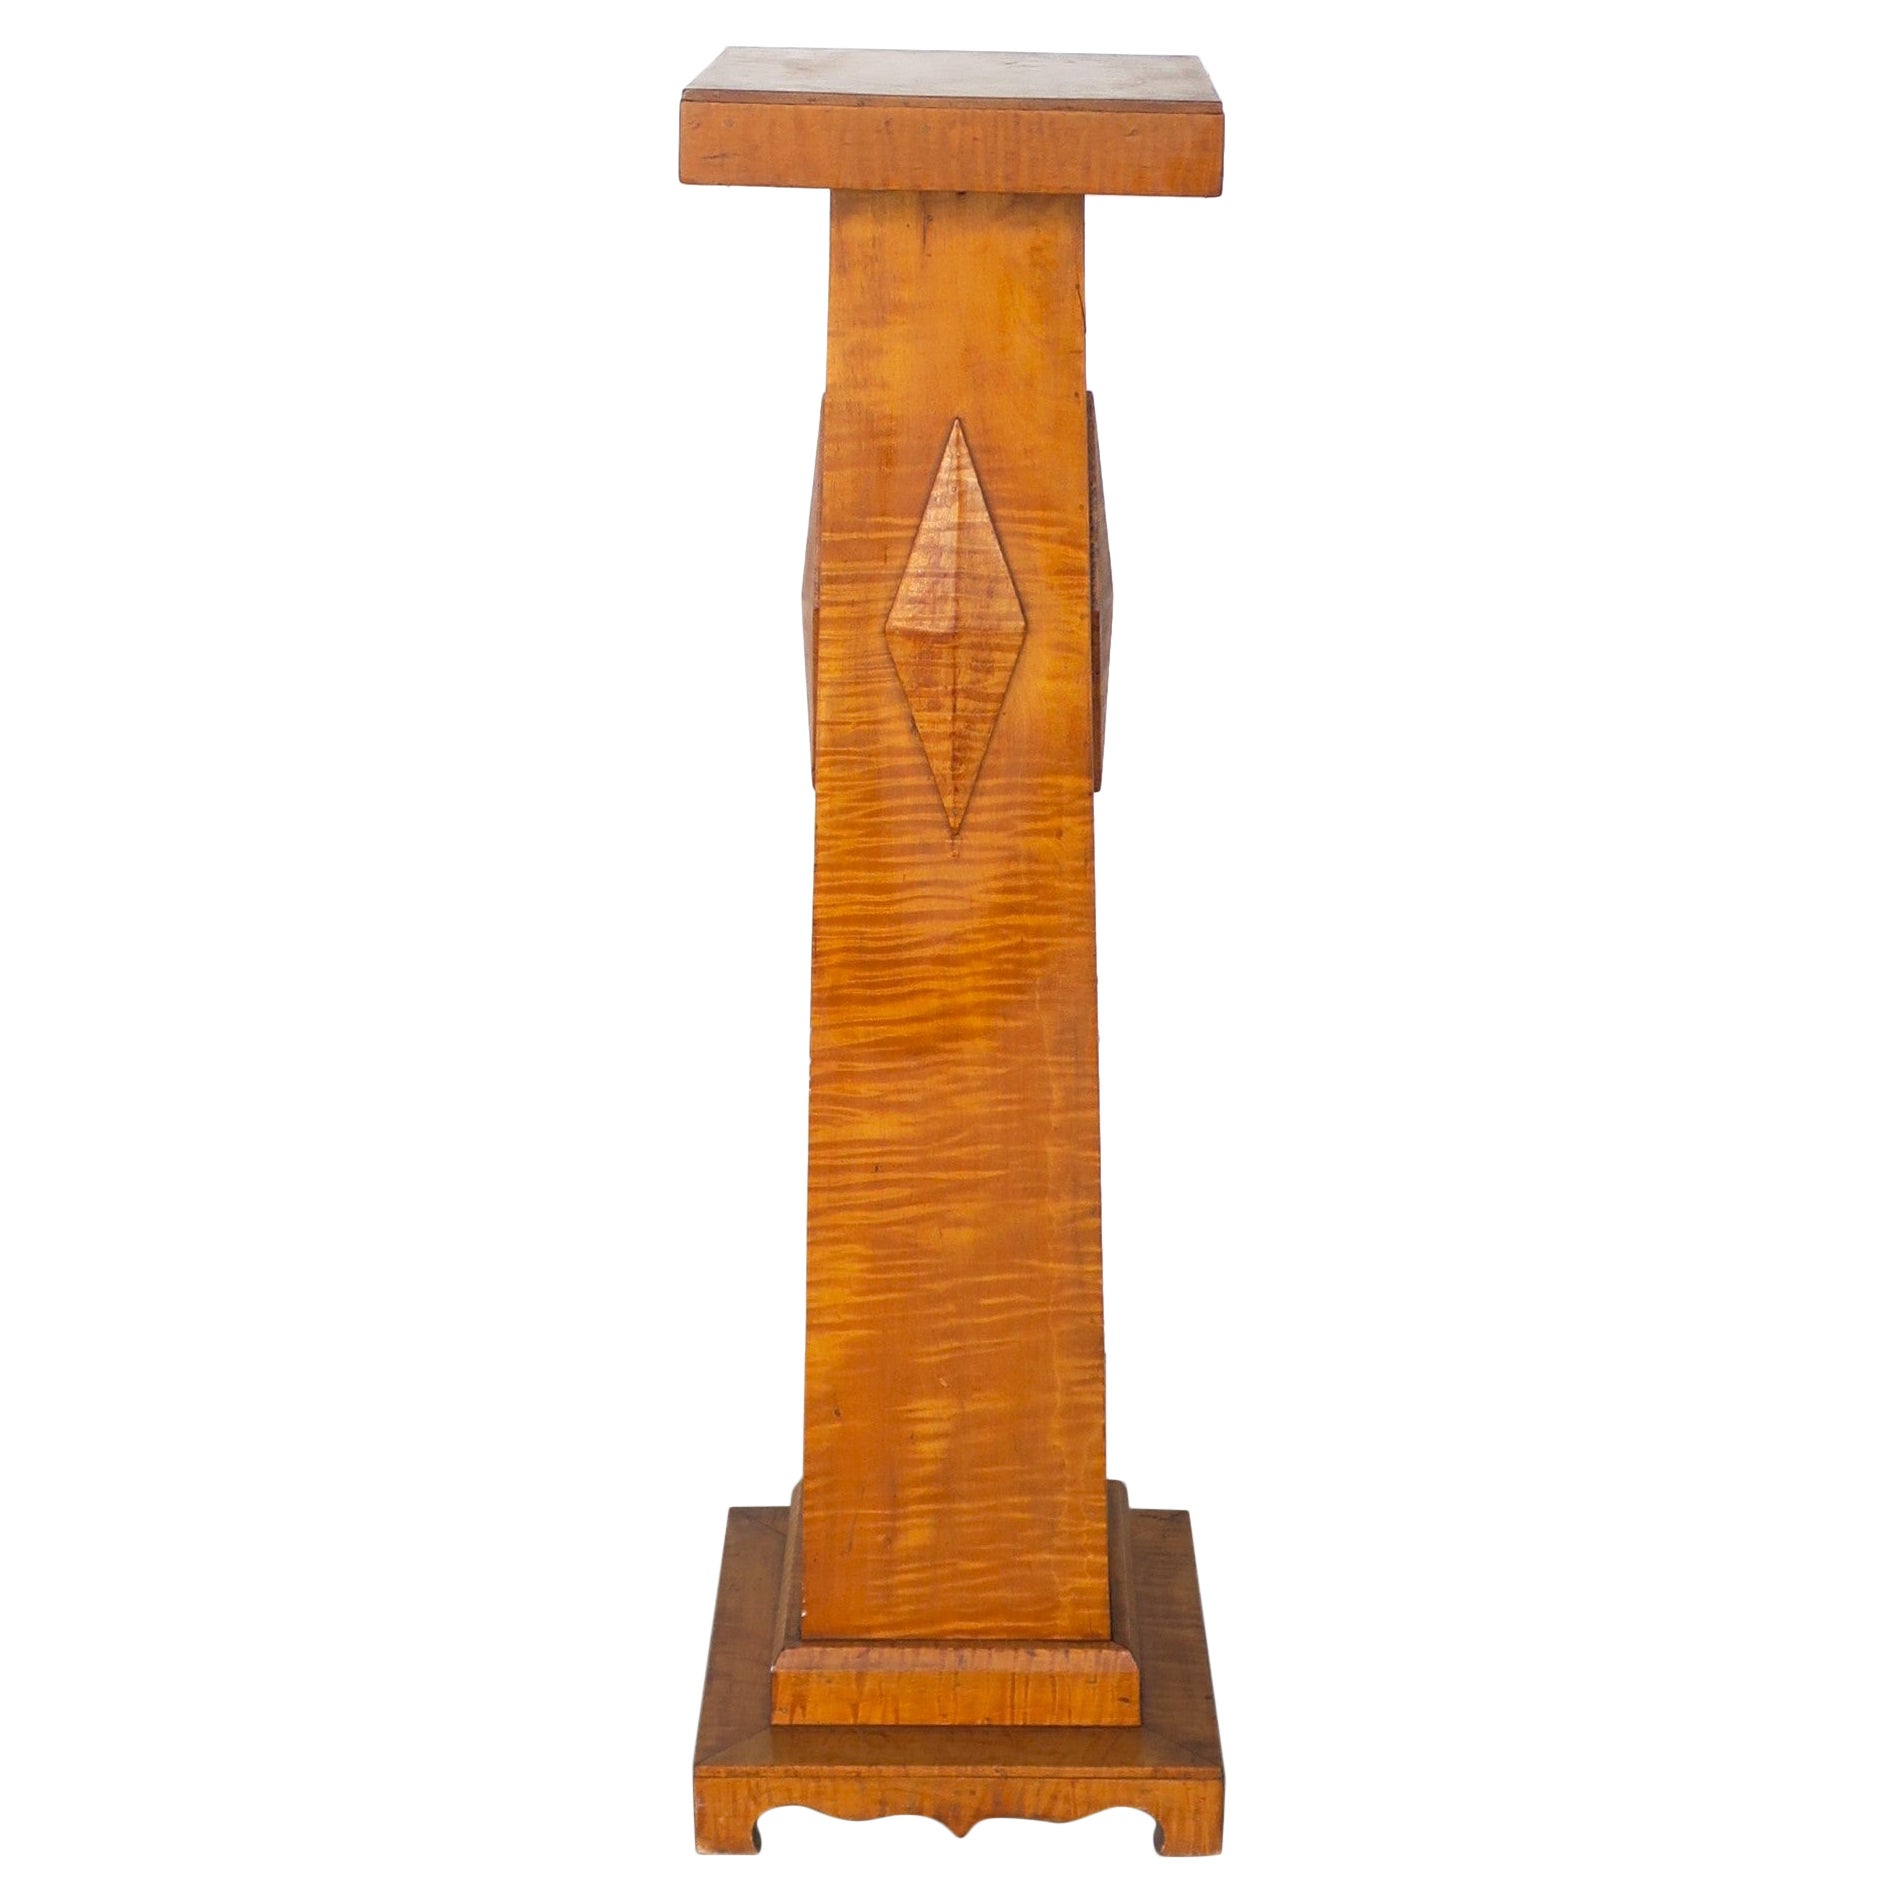 English Wood Column Pedestal Stand